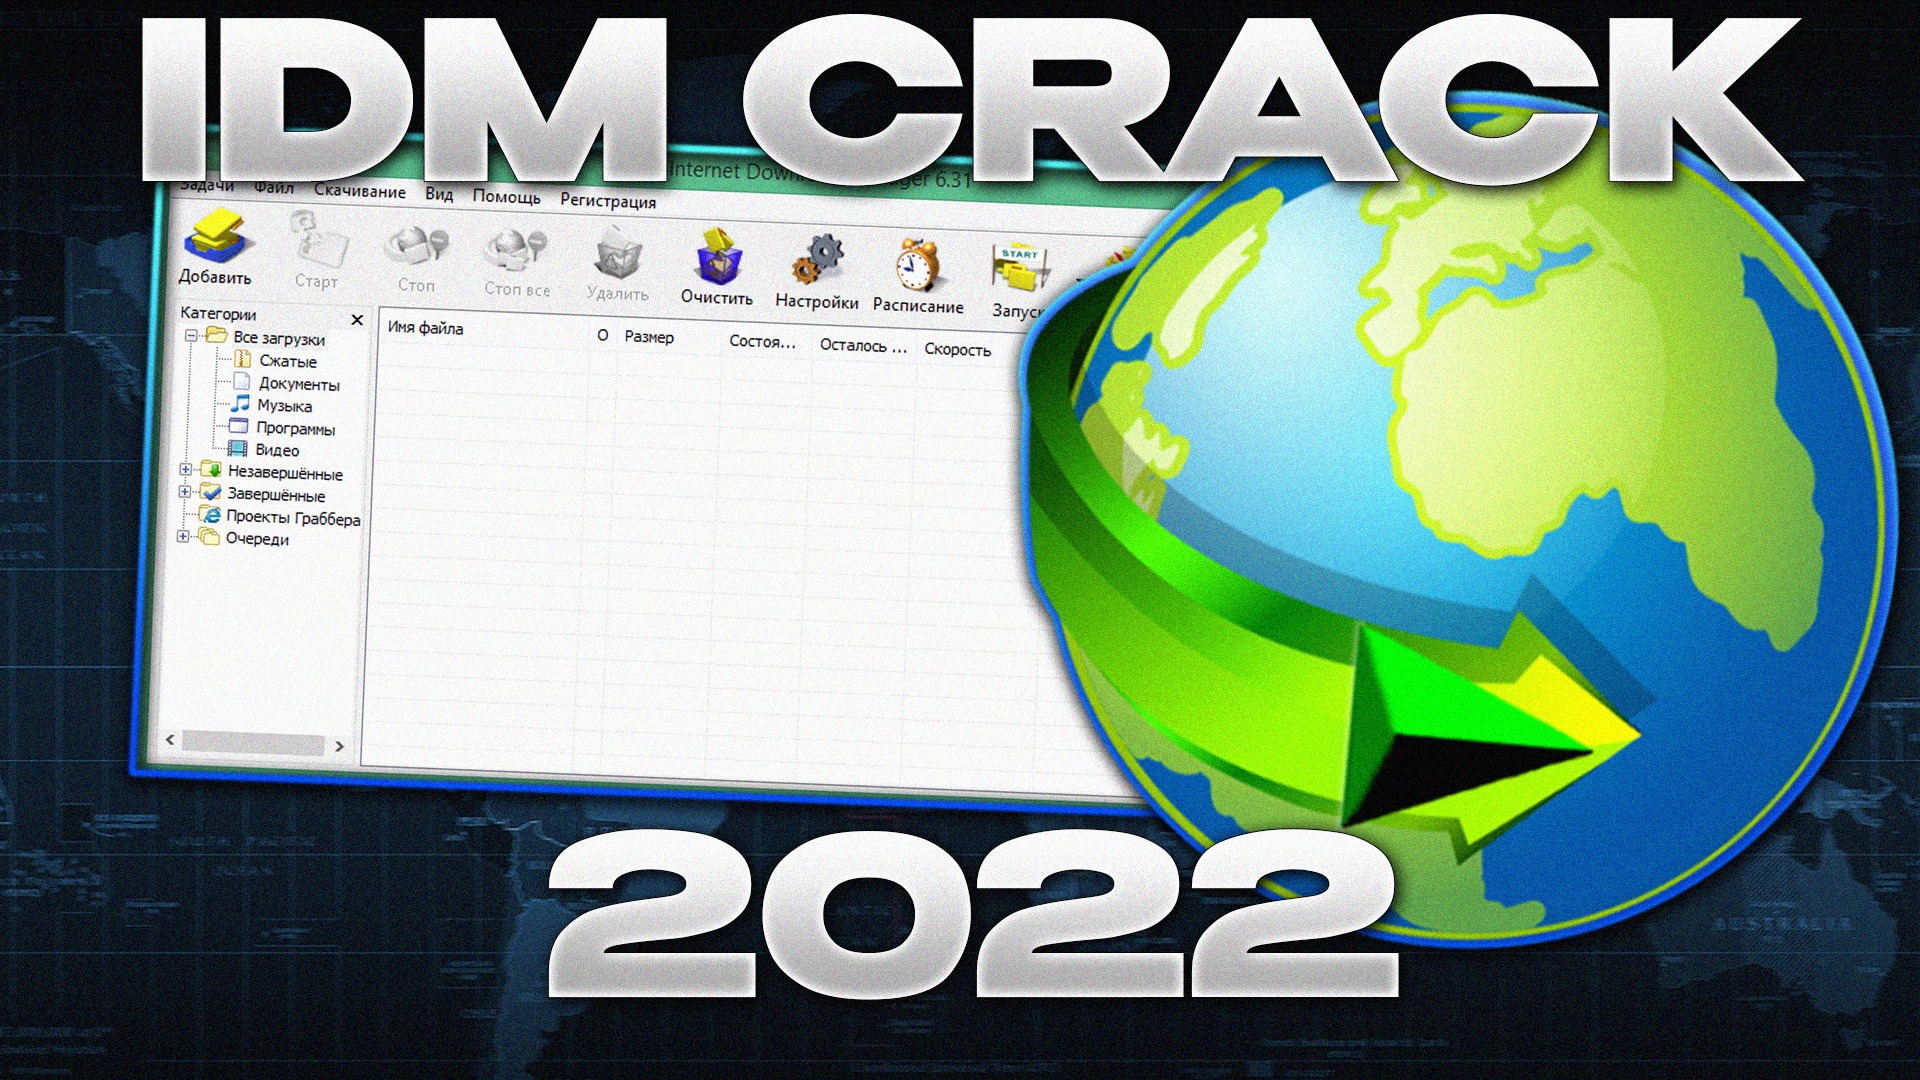 idm cracked download 2022